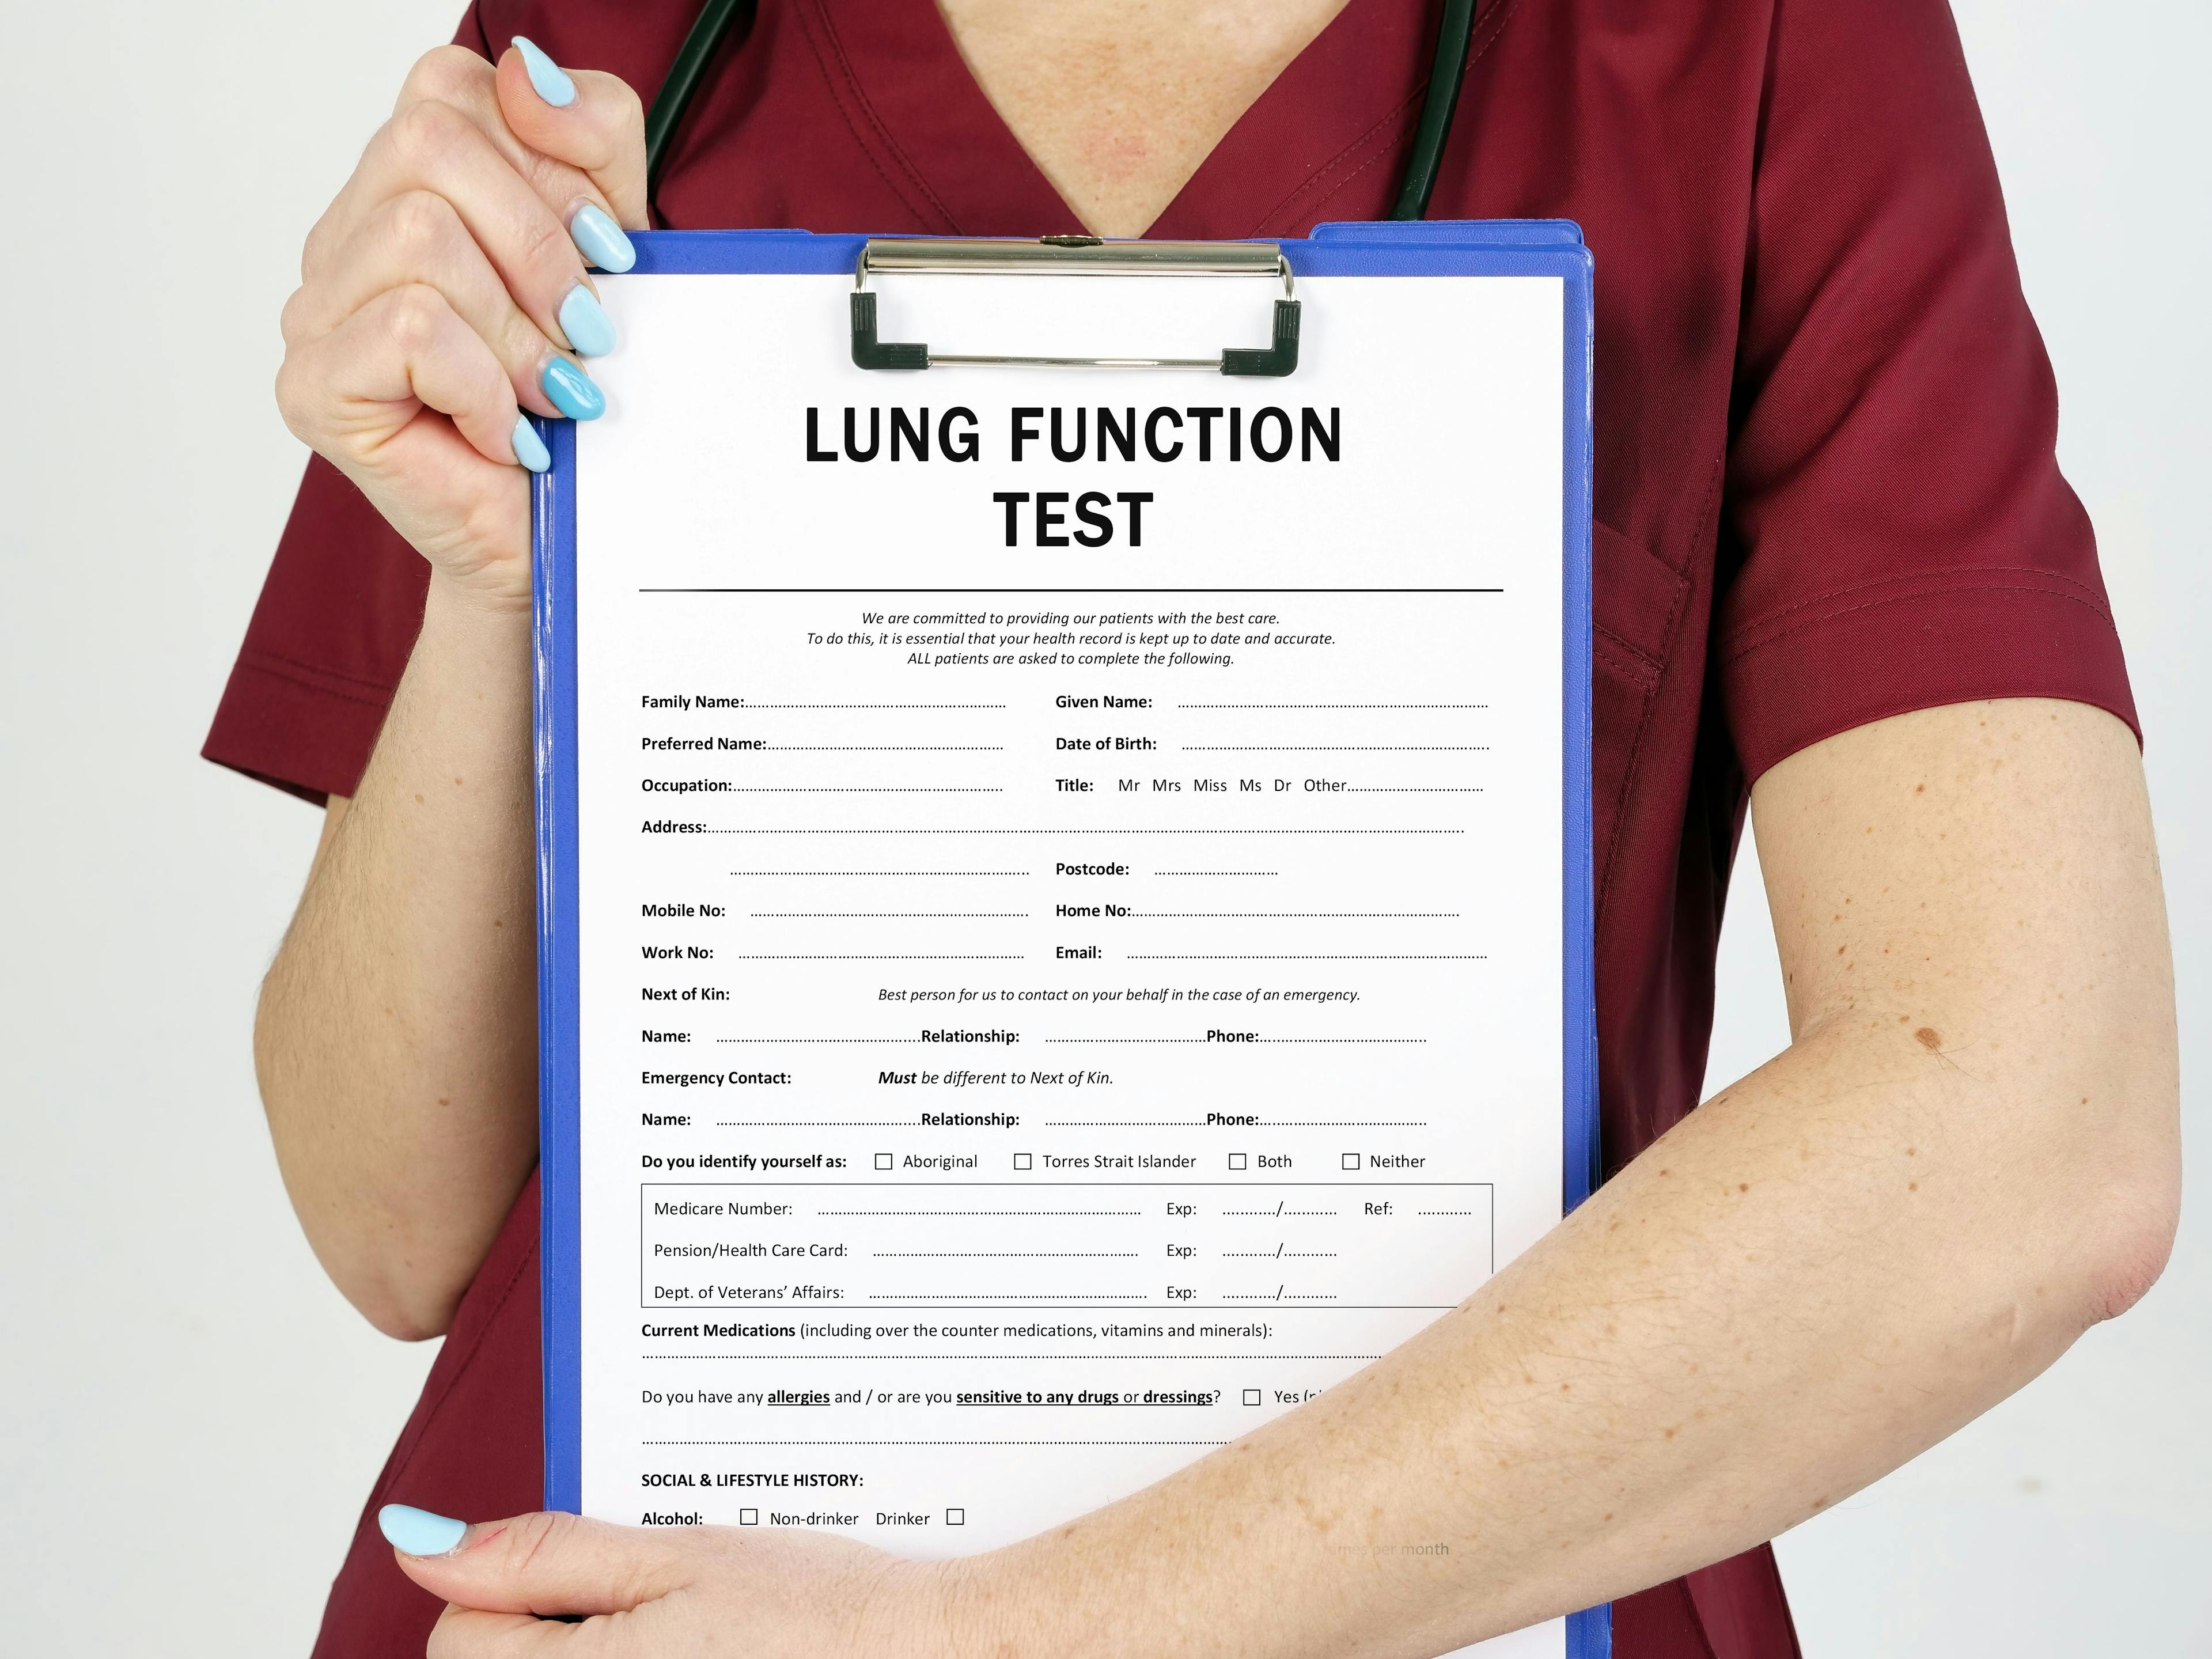 Woman holding a form that ways lung function test | Image credit: ©Yuri Kibalnik